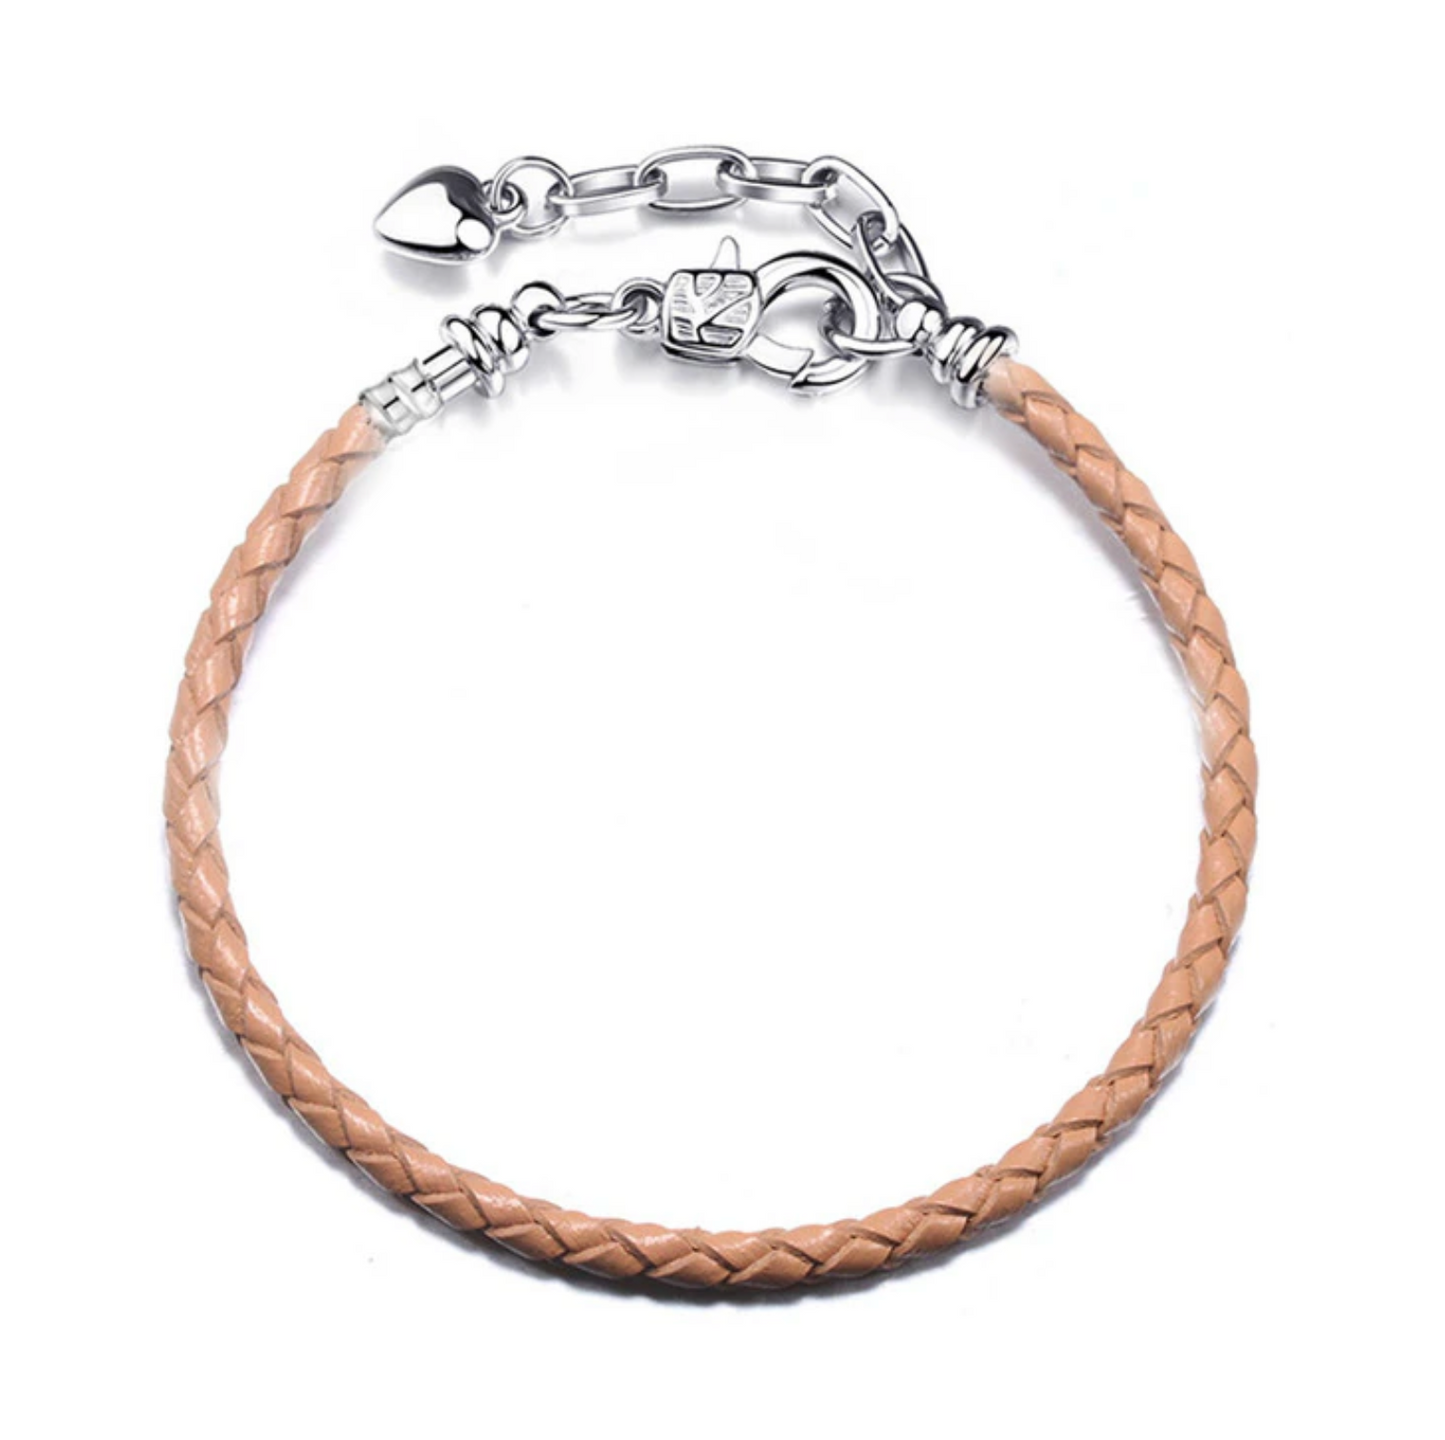 Silvertone Beige Braided Leather Charm Bracelet